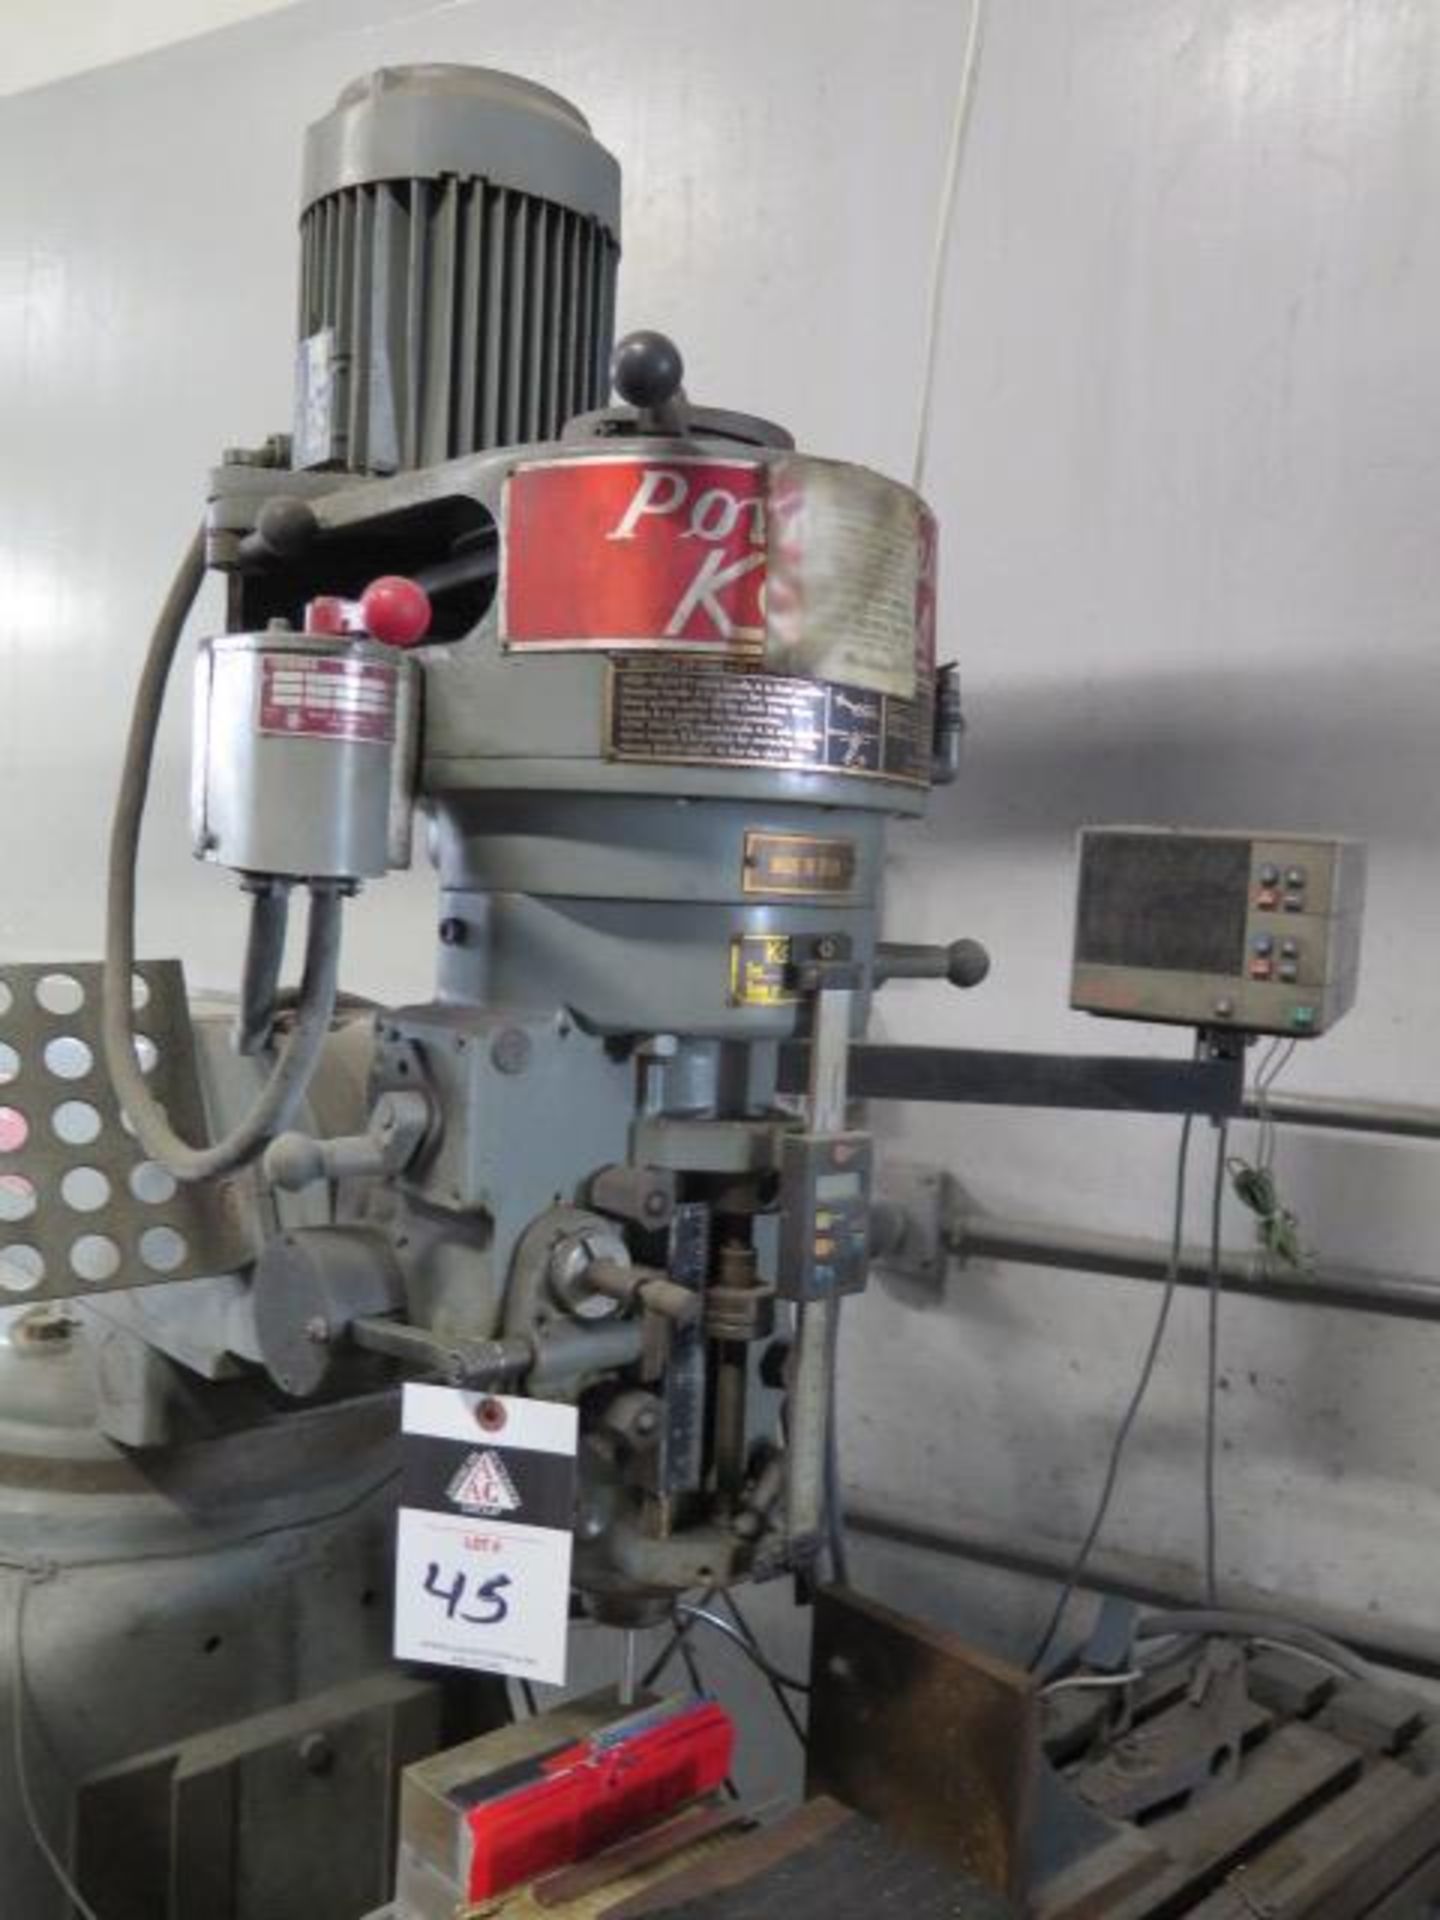 Kondia “Powermill” Vertical Mill w/ Mitutoyo DRO, Mitutoyo Digital “Z” Scale,85-3000 RPM, SOLD AS IS - Image 3 of 9